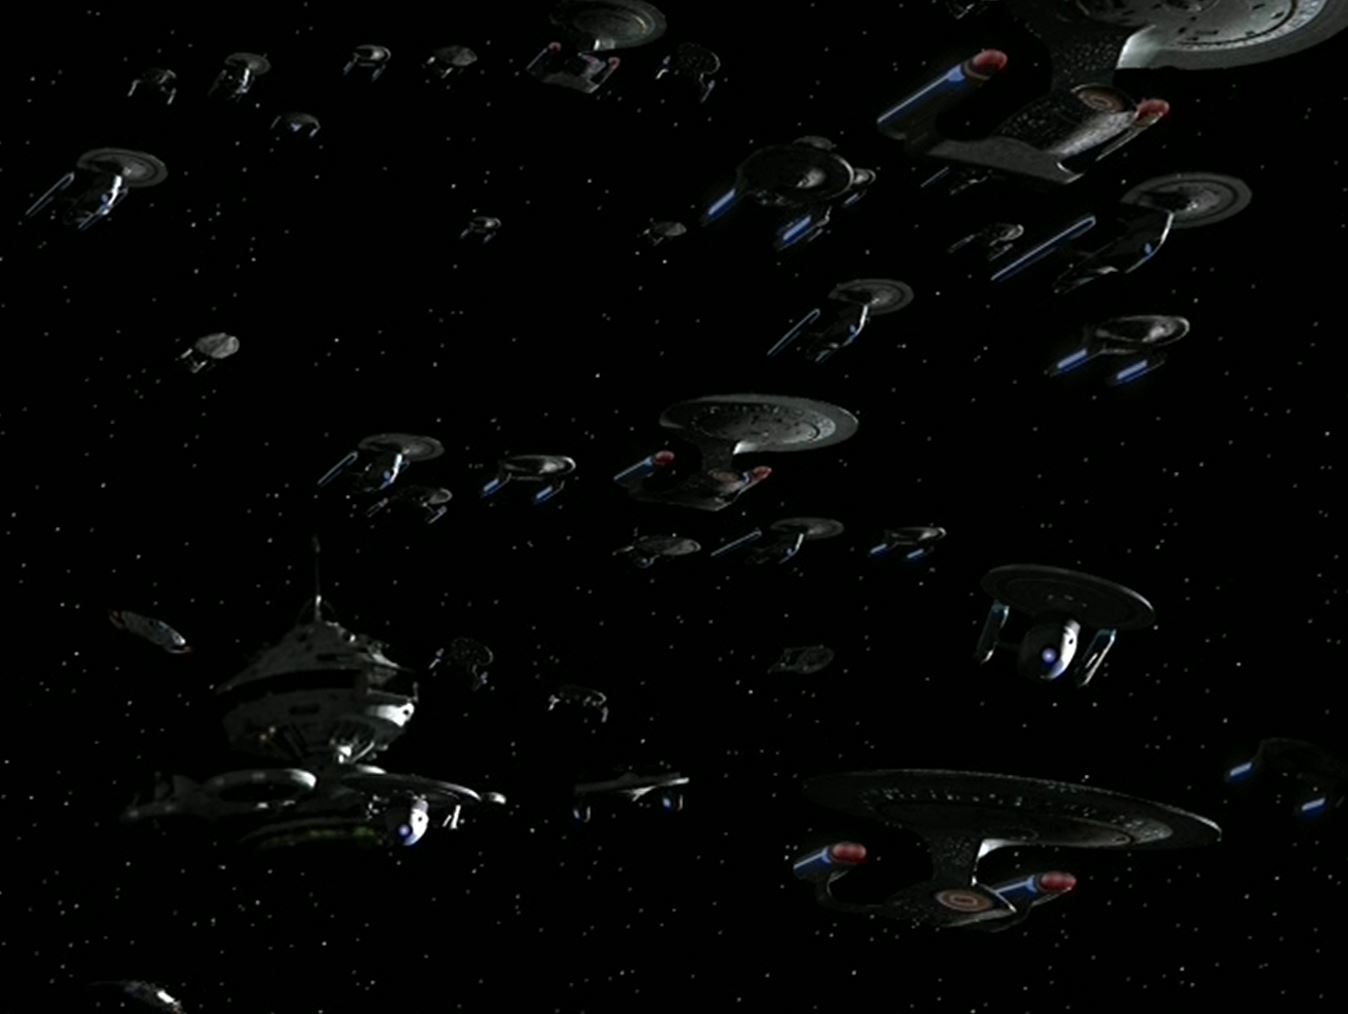 Federation_fleet_departs_Starbase_375.jpg